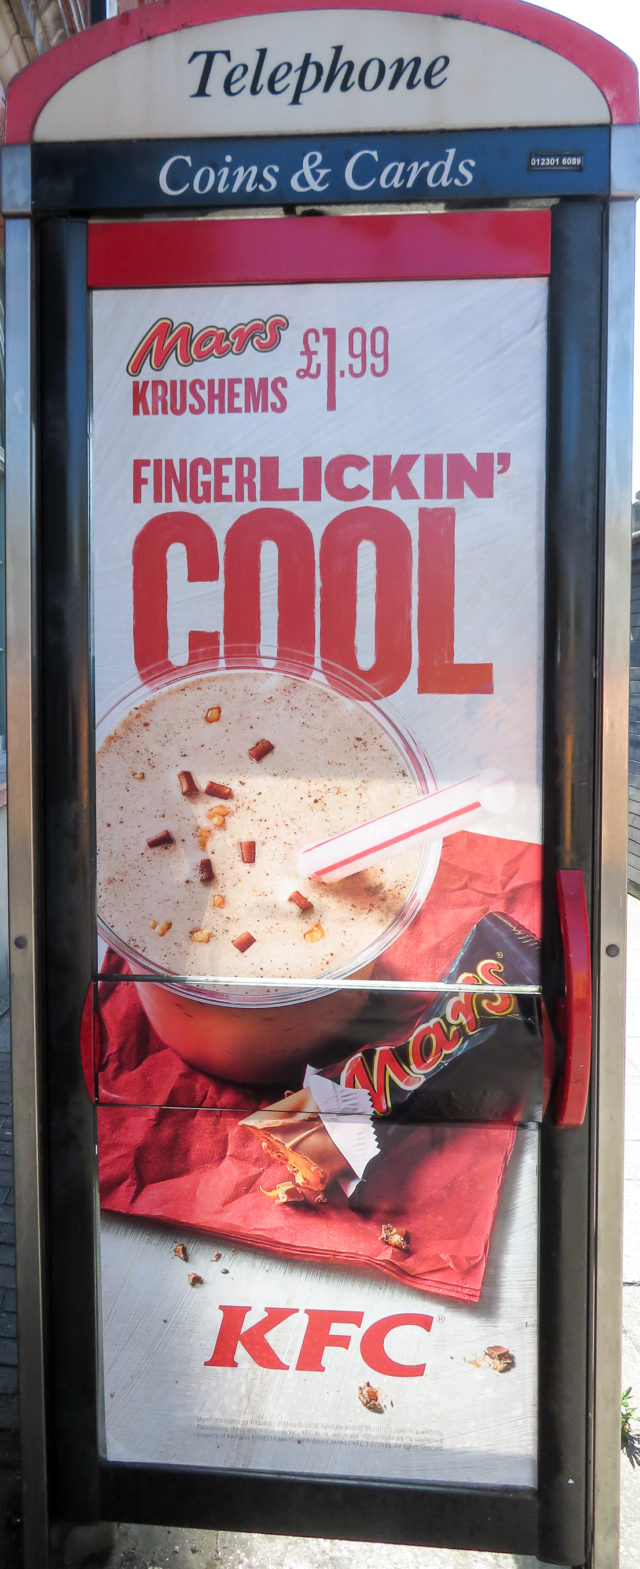 KFC's ad for the Mars Krushems